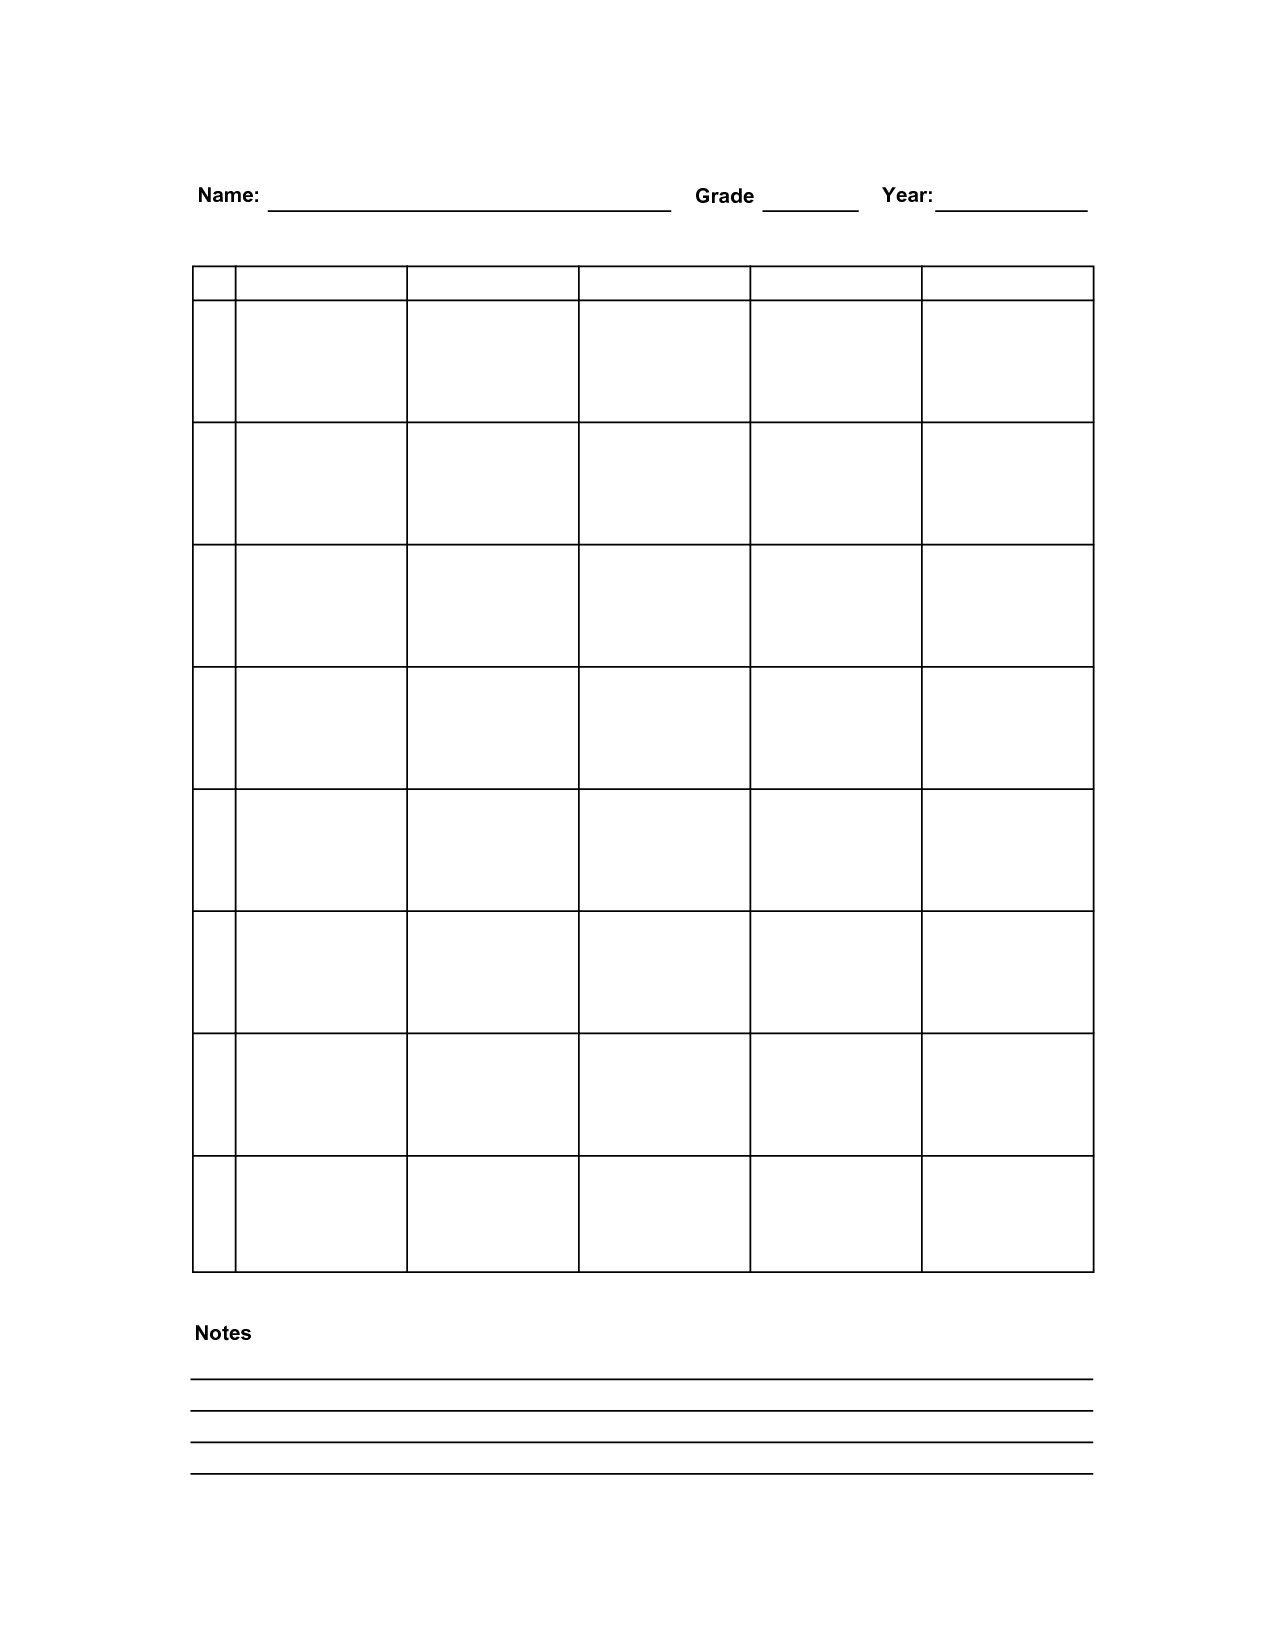 Free Printable Teacher Planner Worksheets Image